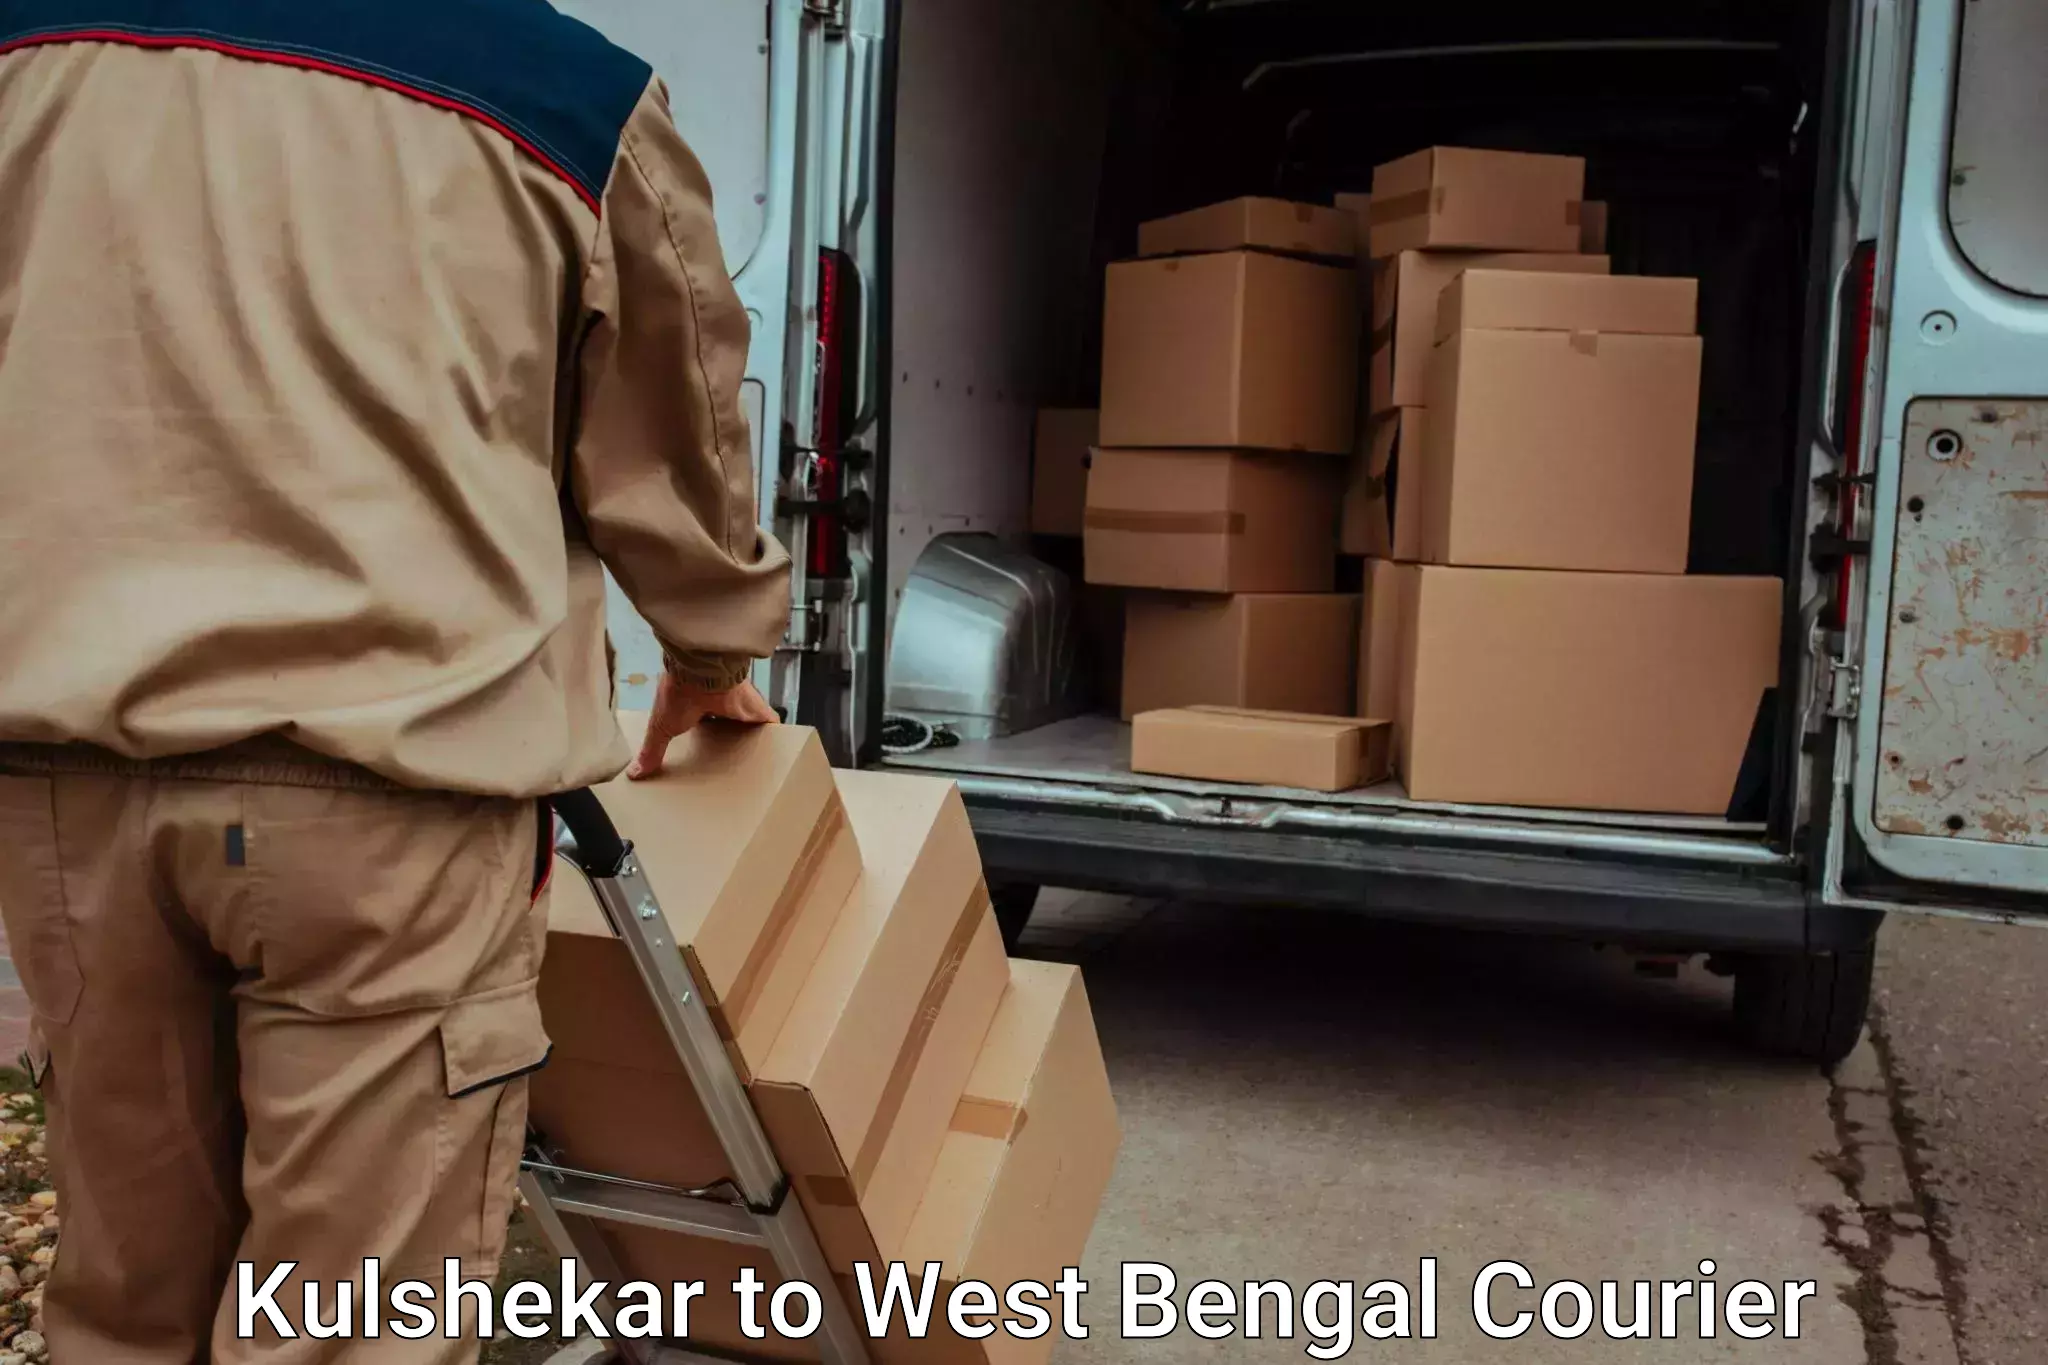 Baggage relocation service in Kulshekar to Surjapur